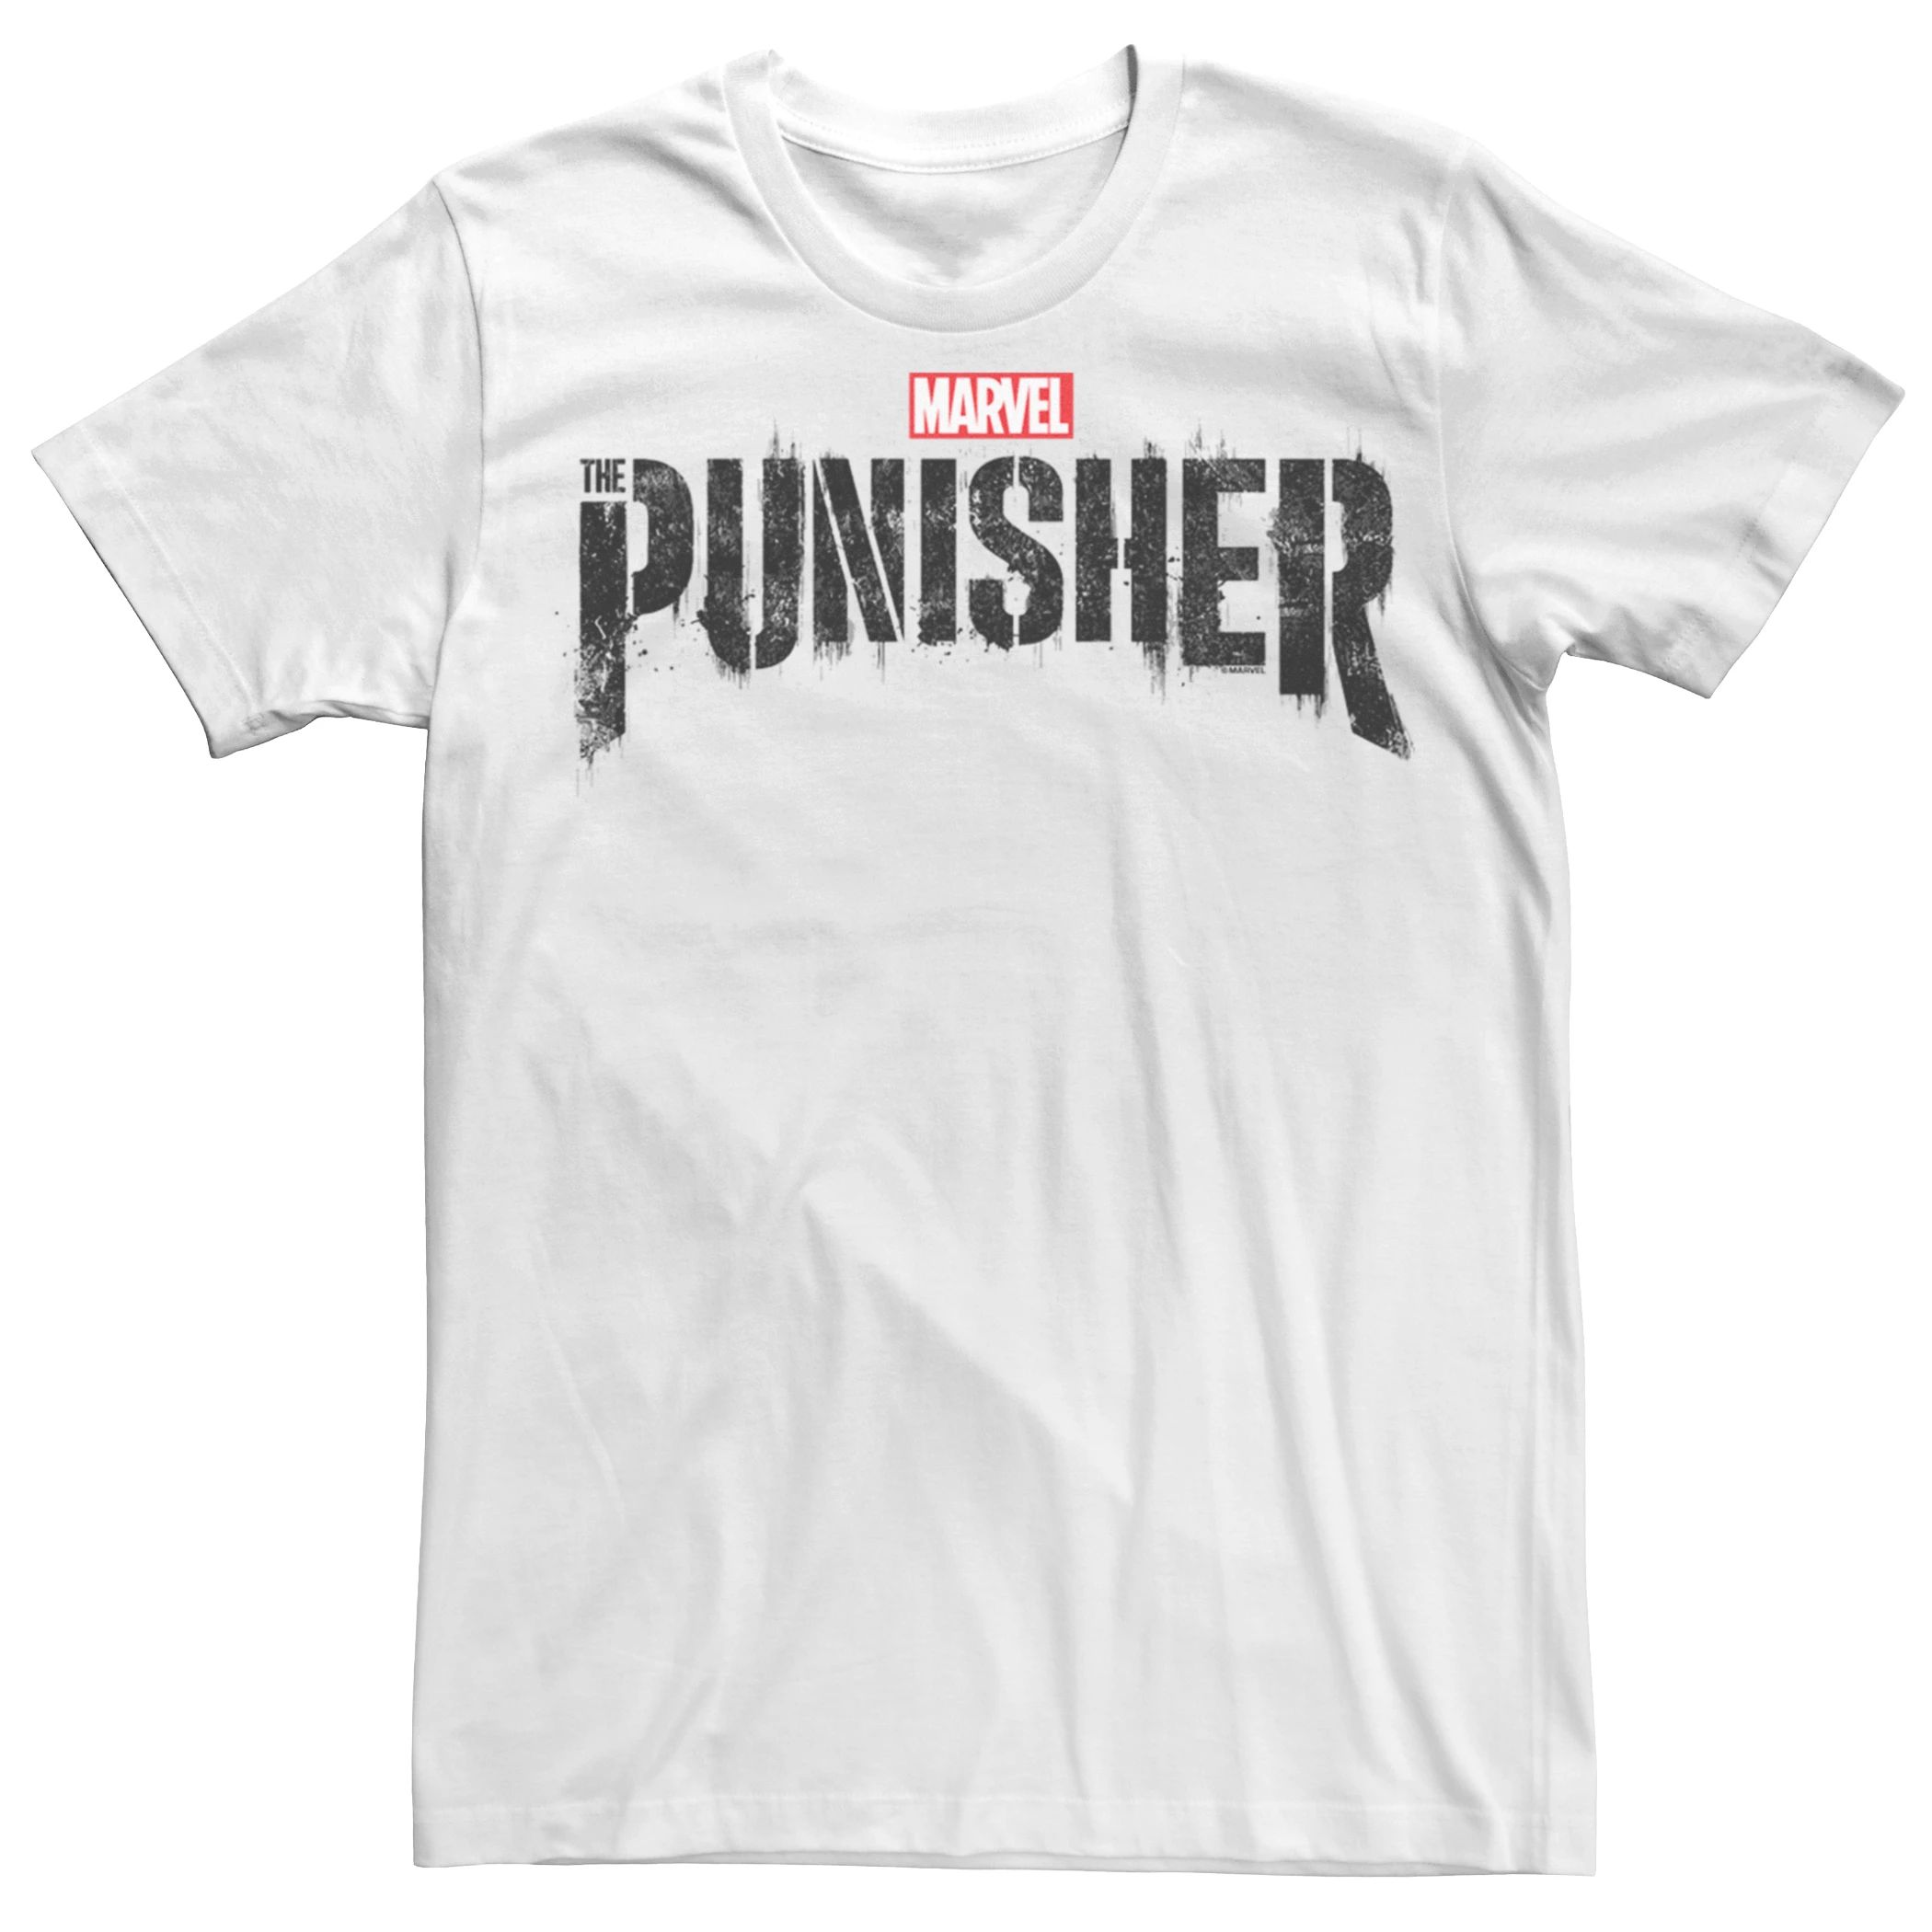 Мужская футболка с рисунком Marvel Punisher Name Licensed Character футболка мужская marvel punisher s